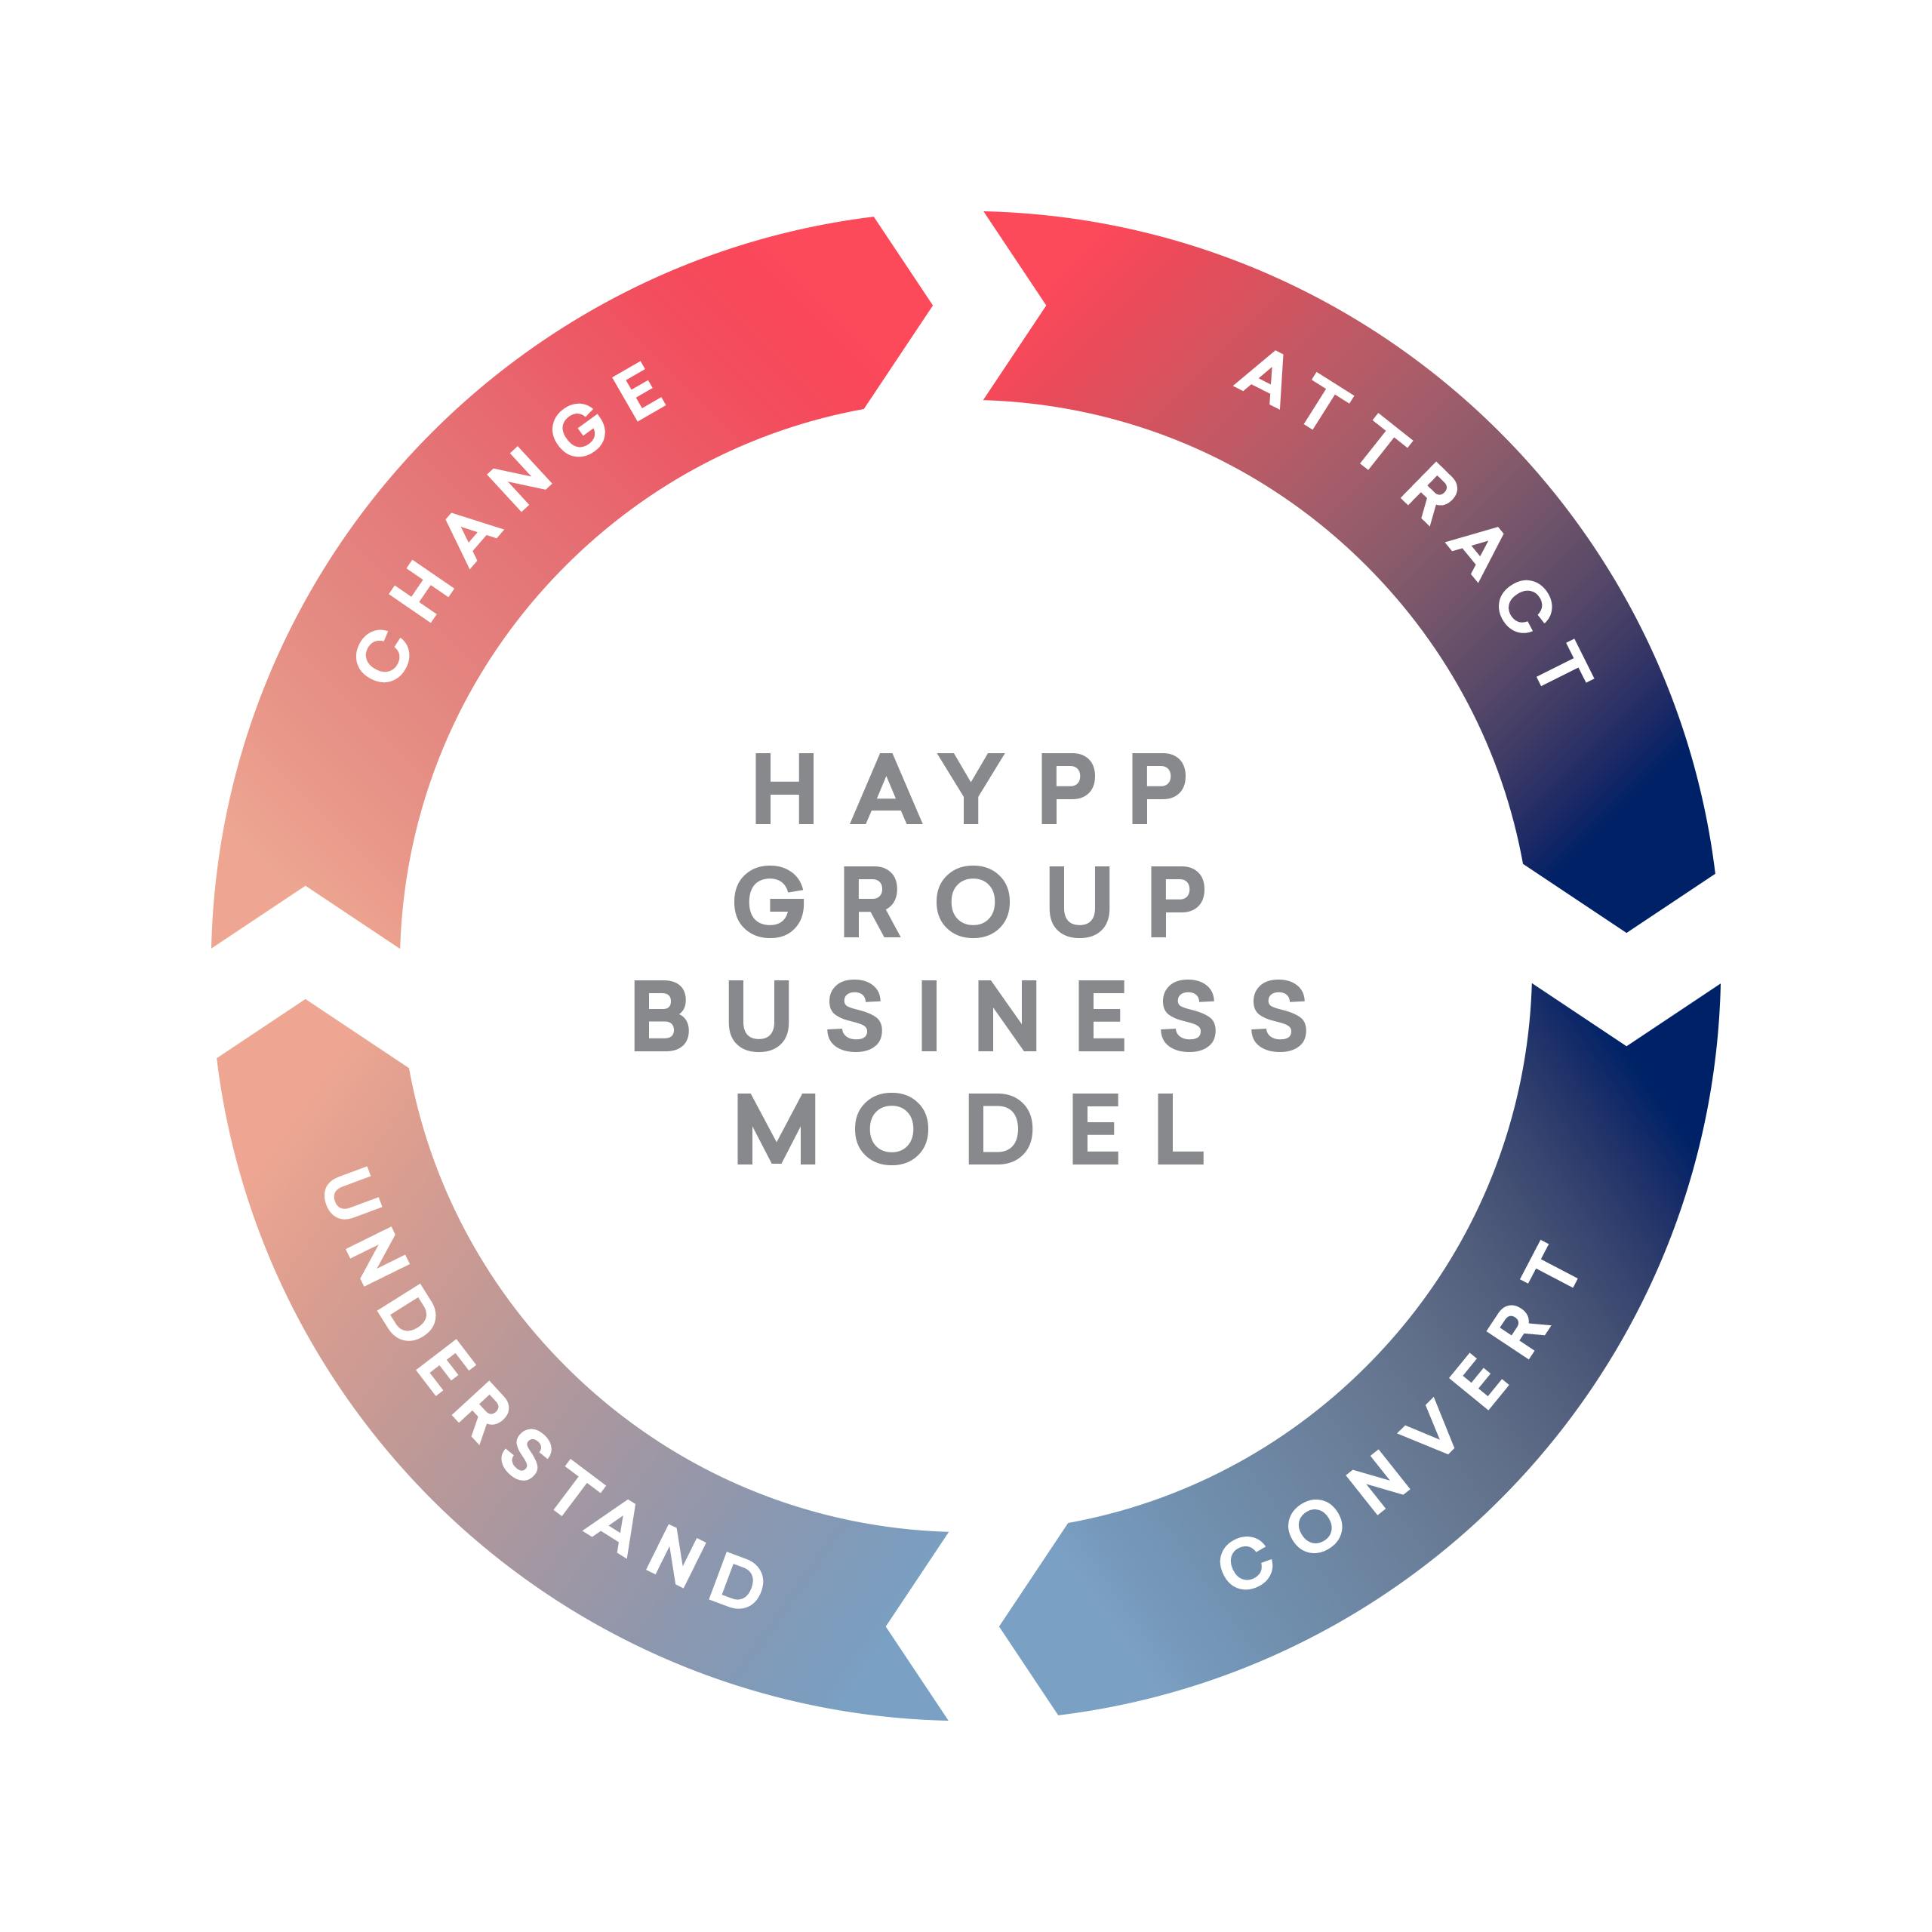 Haypp Group business model